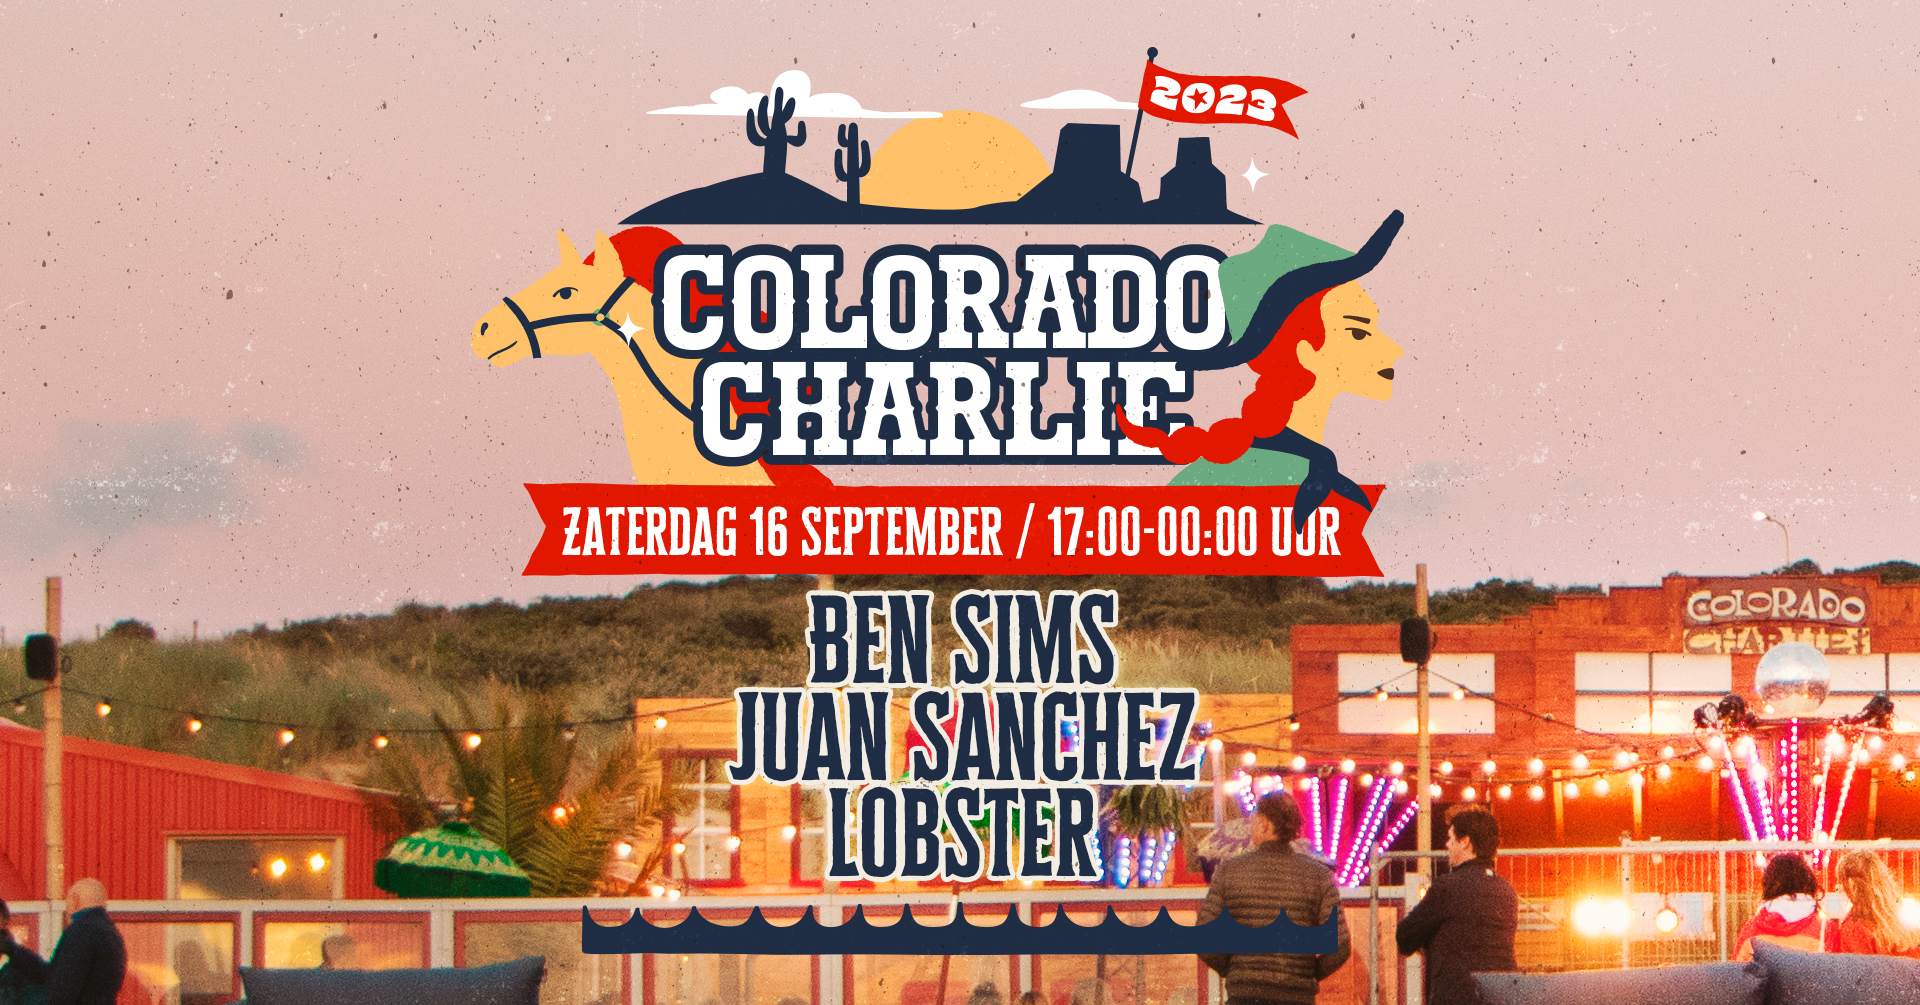 Colorado Charlie with Ben Sims, Juan Sanchez, Lobster - フライヤー表